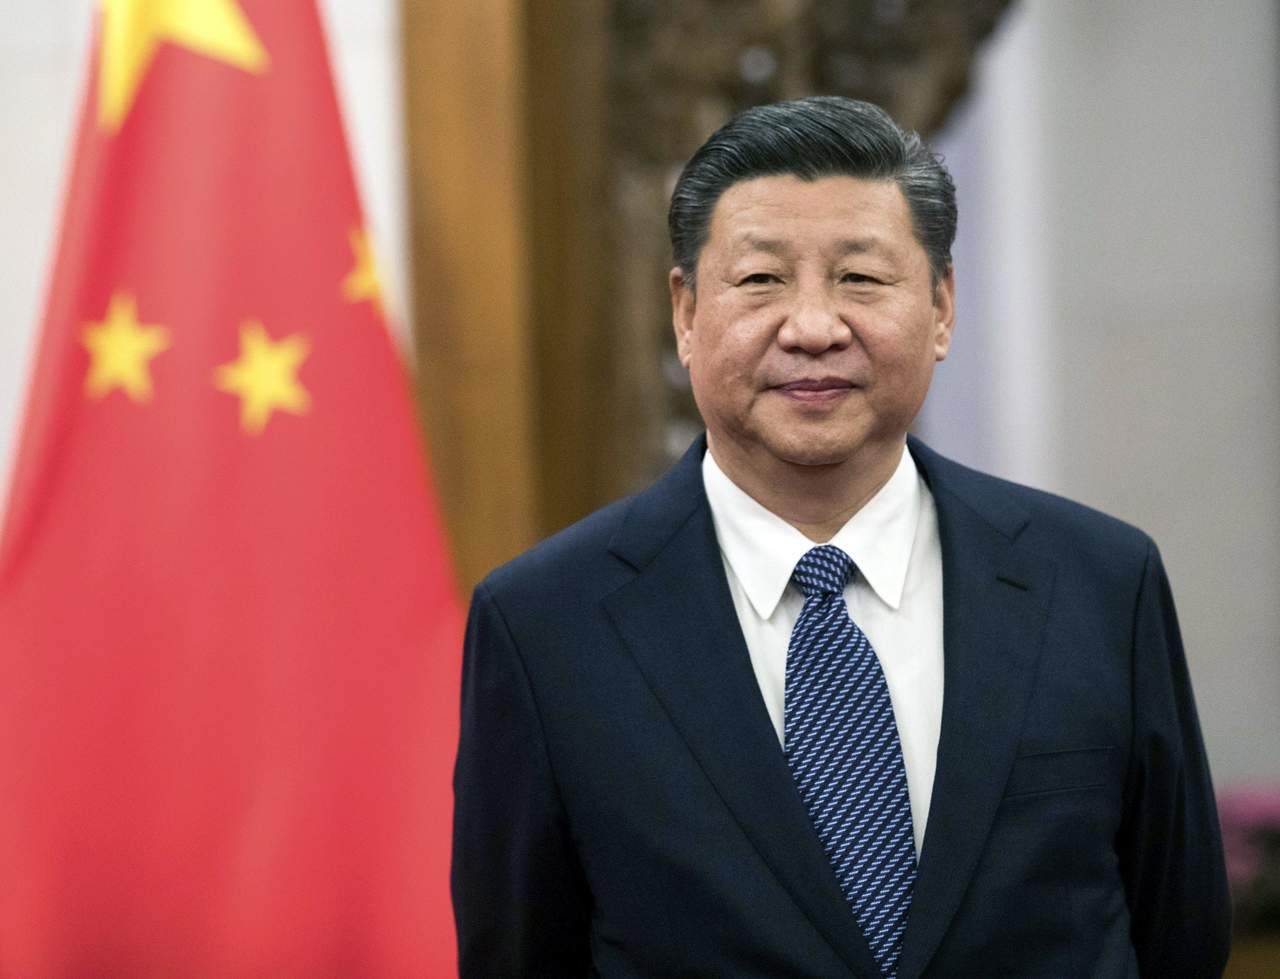 Evita EU criticar la posible perpetuación de Xi Jinping en el poder chino